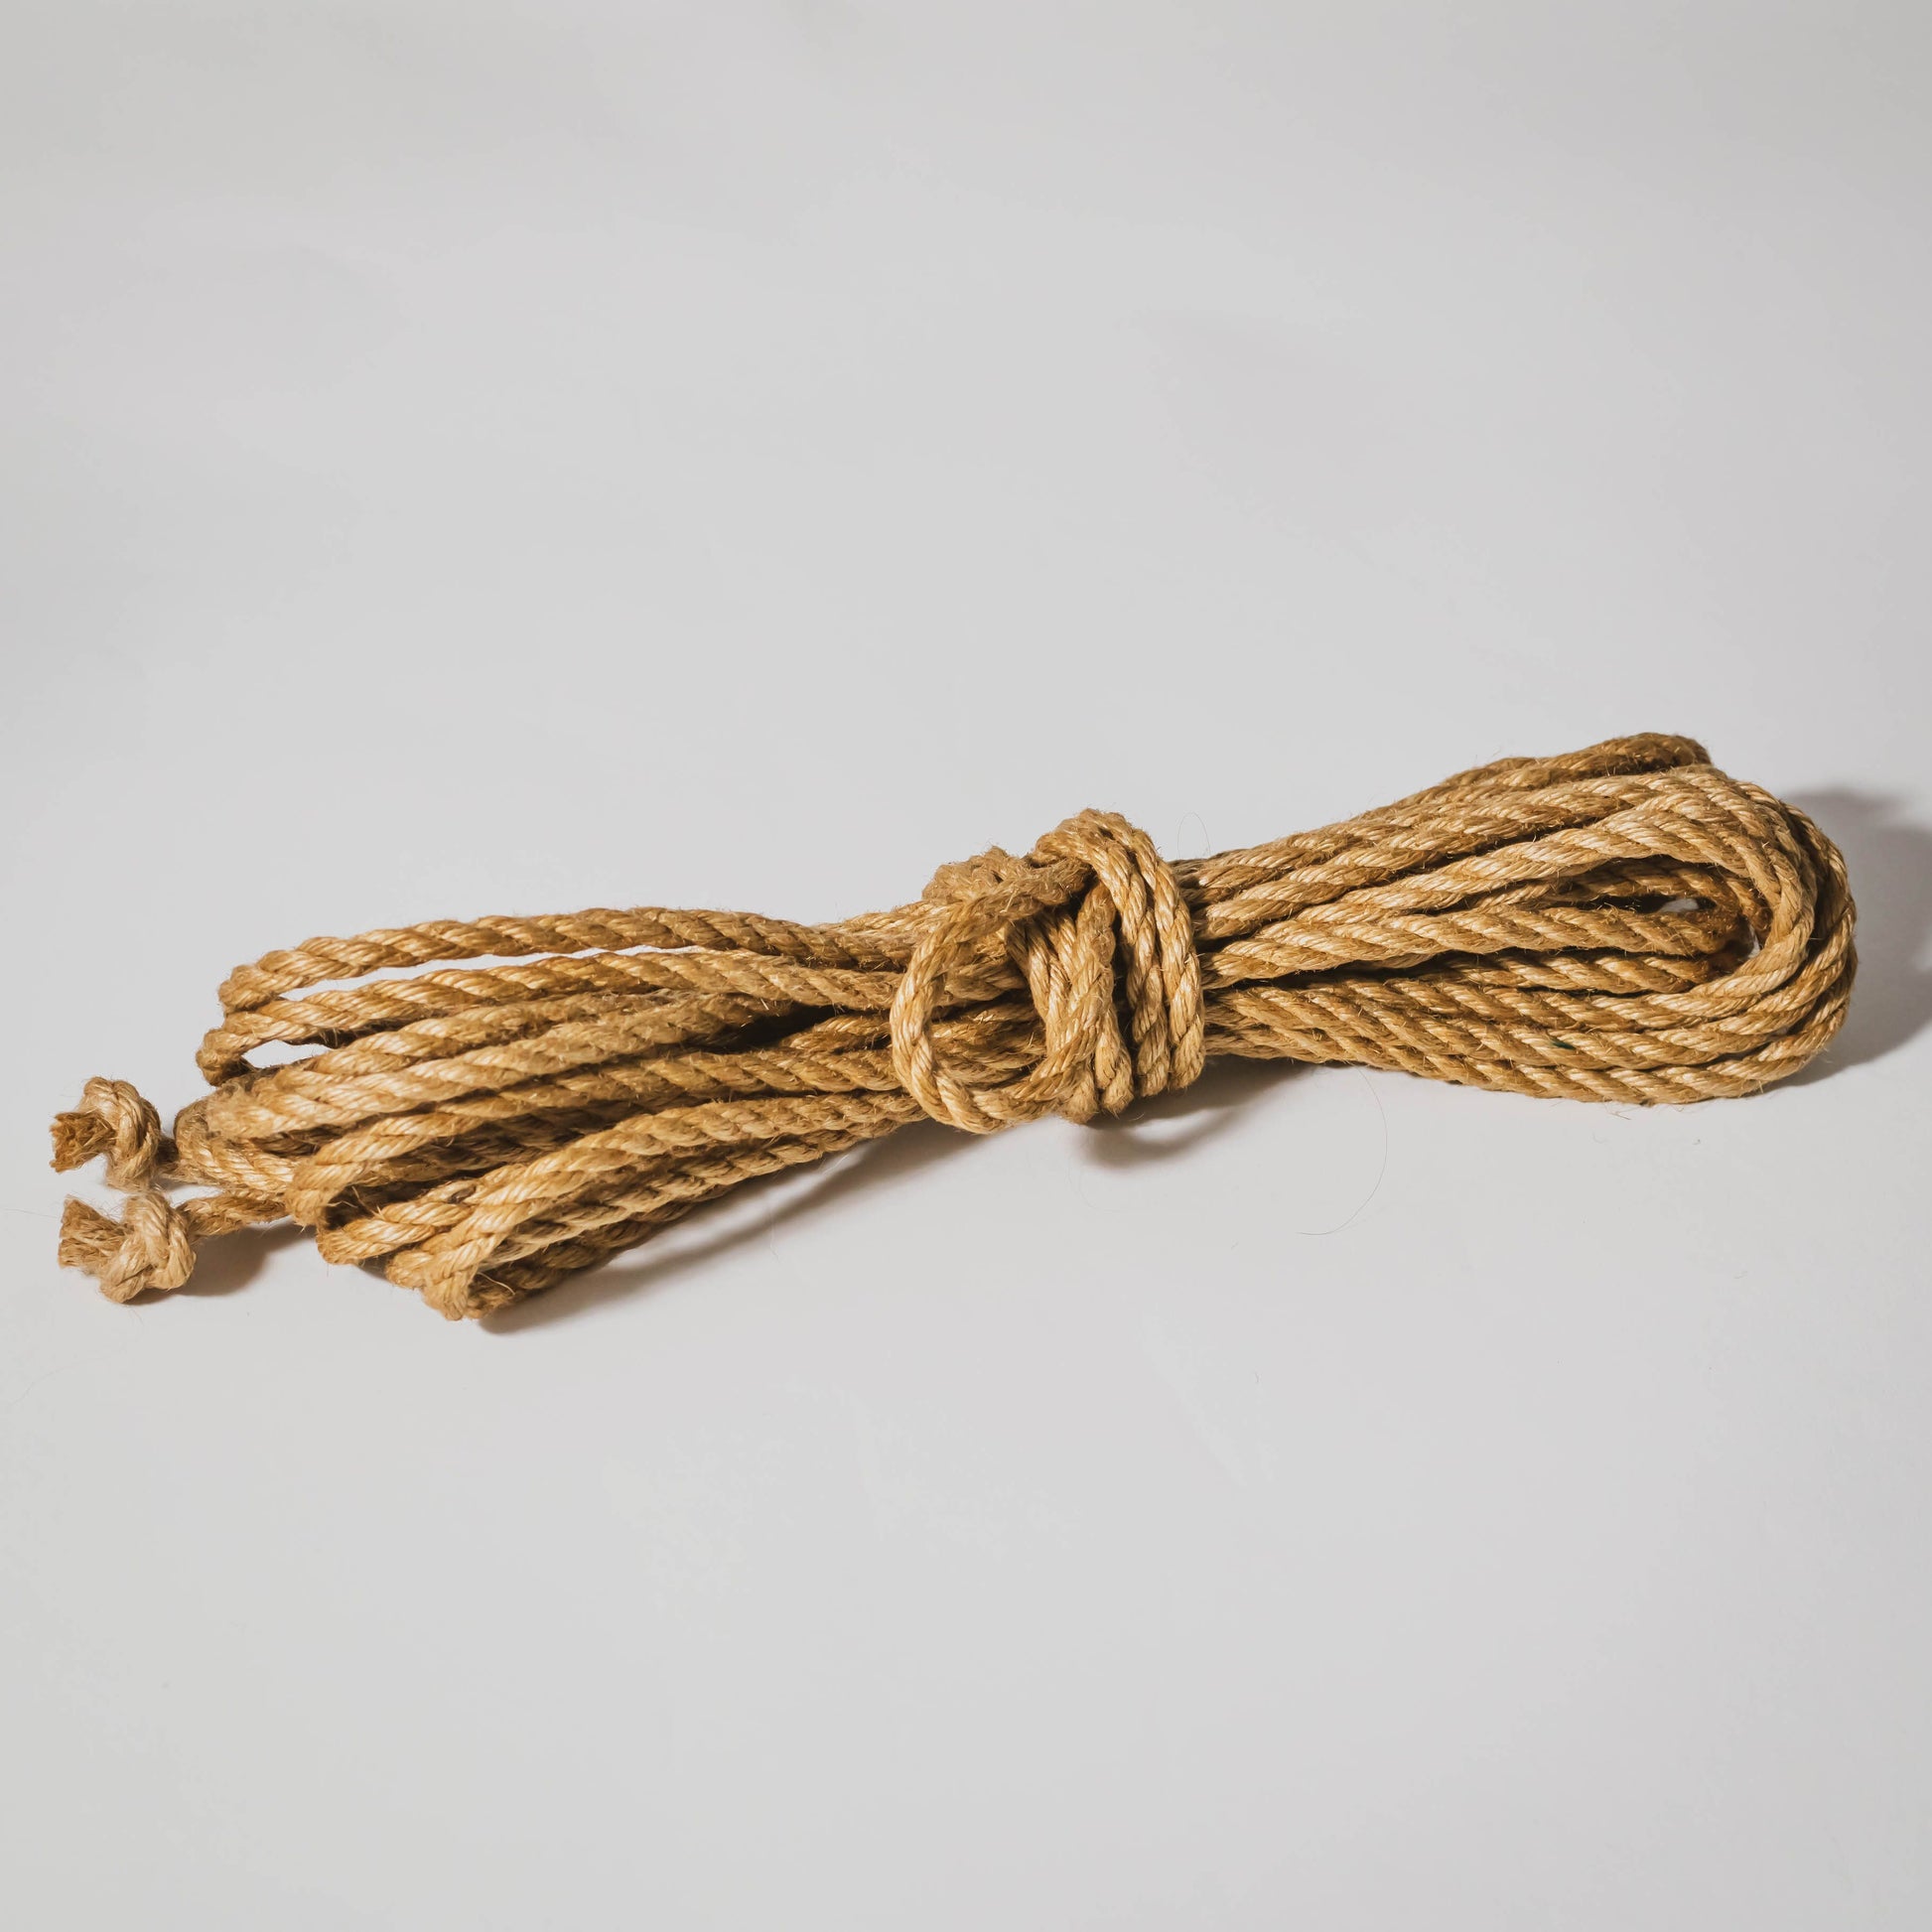 Spooled Natural Jute Shibari Rope 300+ feet Ready to use, Jute Rope 